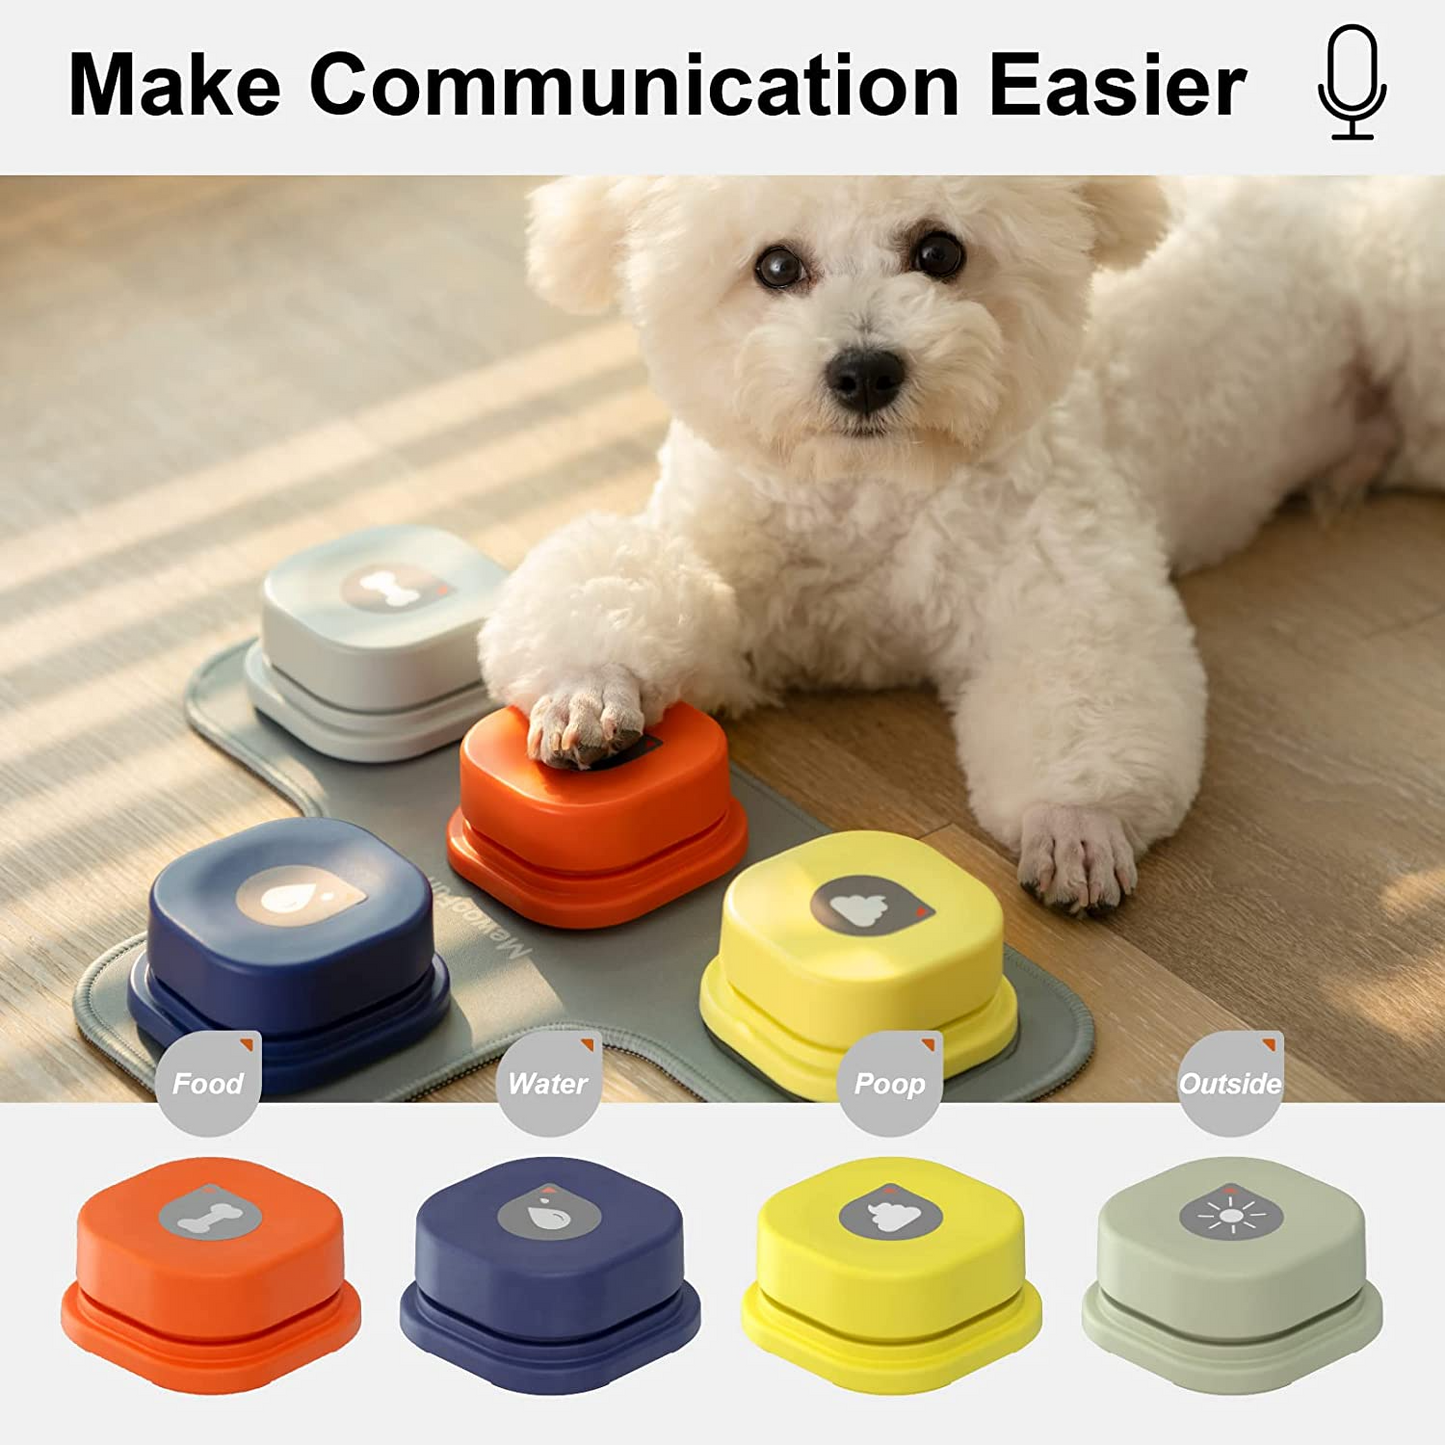 Dog Button Record Talking Pet Communication Vocal Training